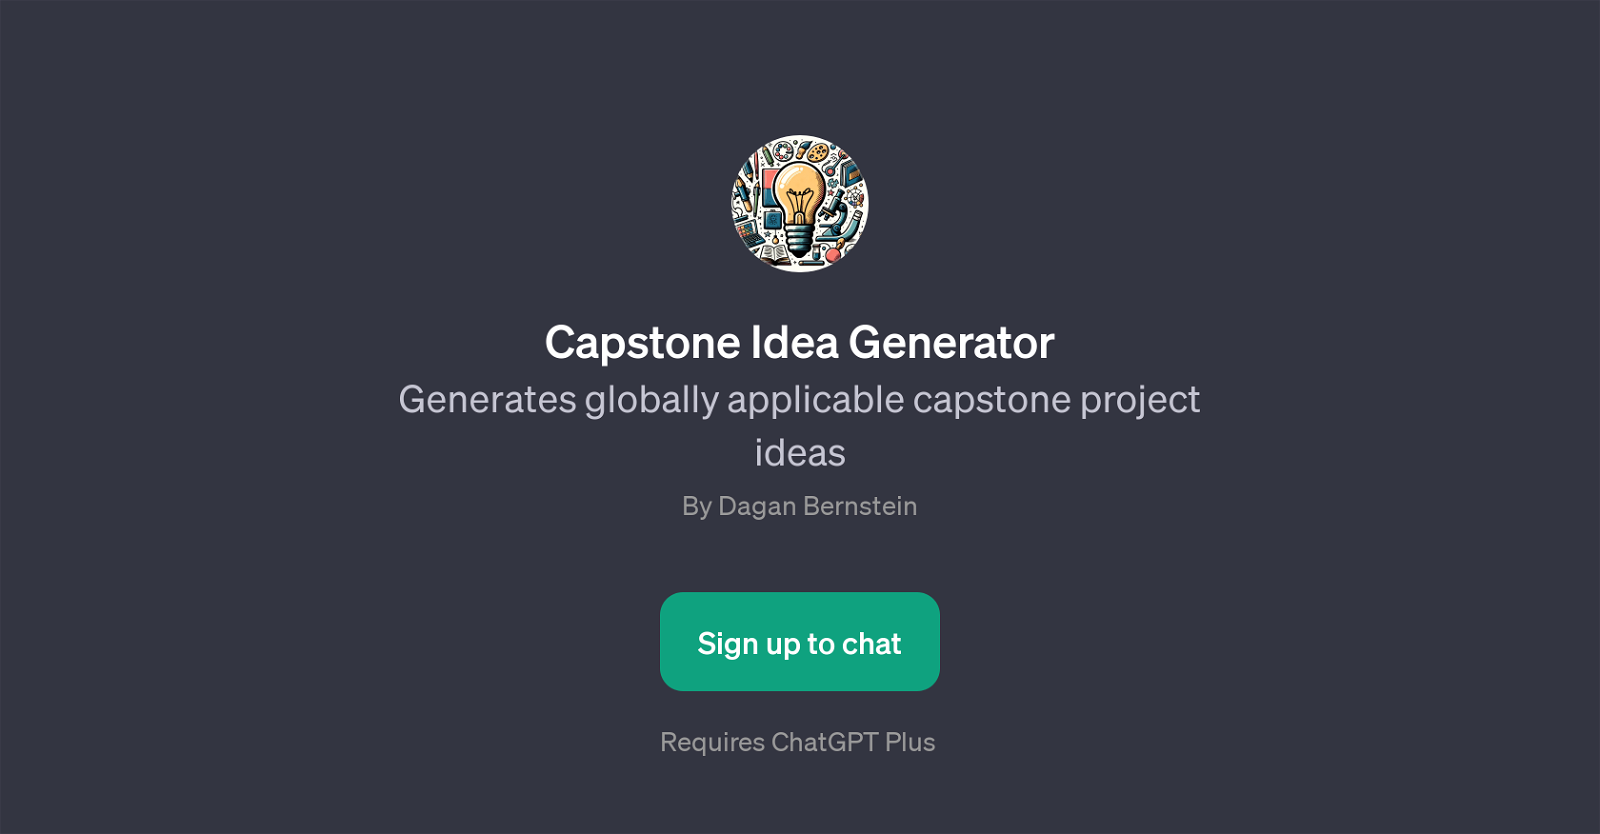 Capstone Idea Generator website